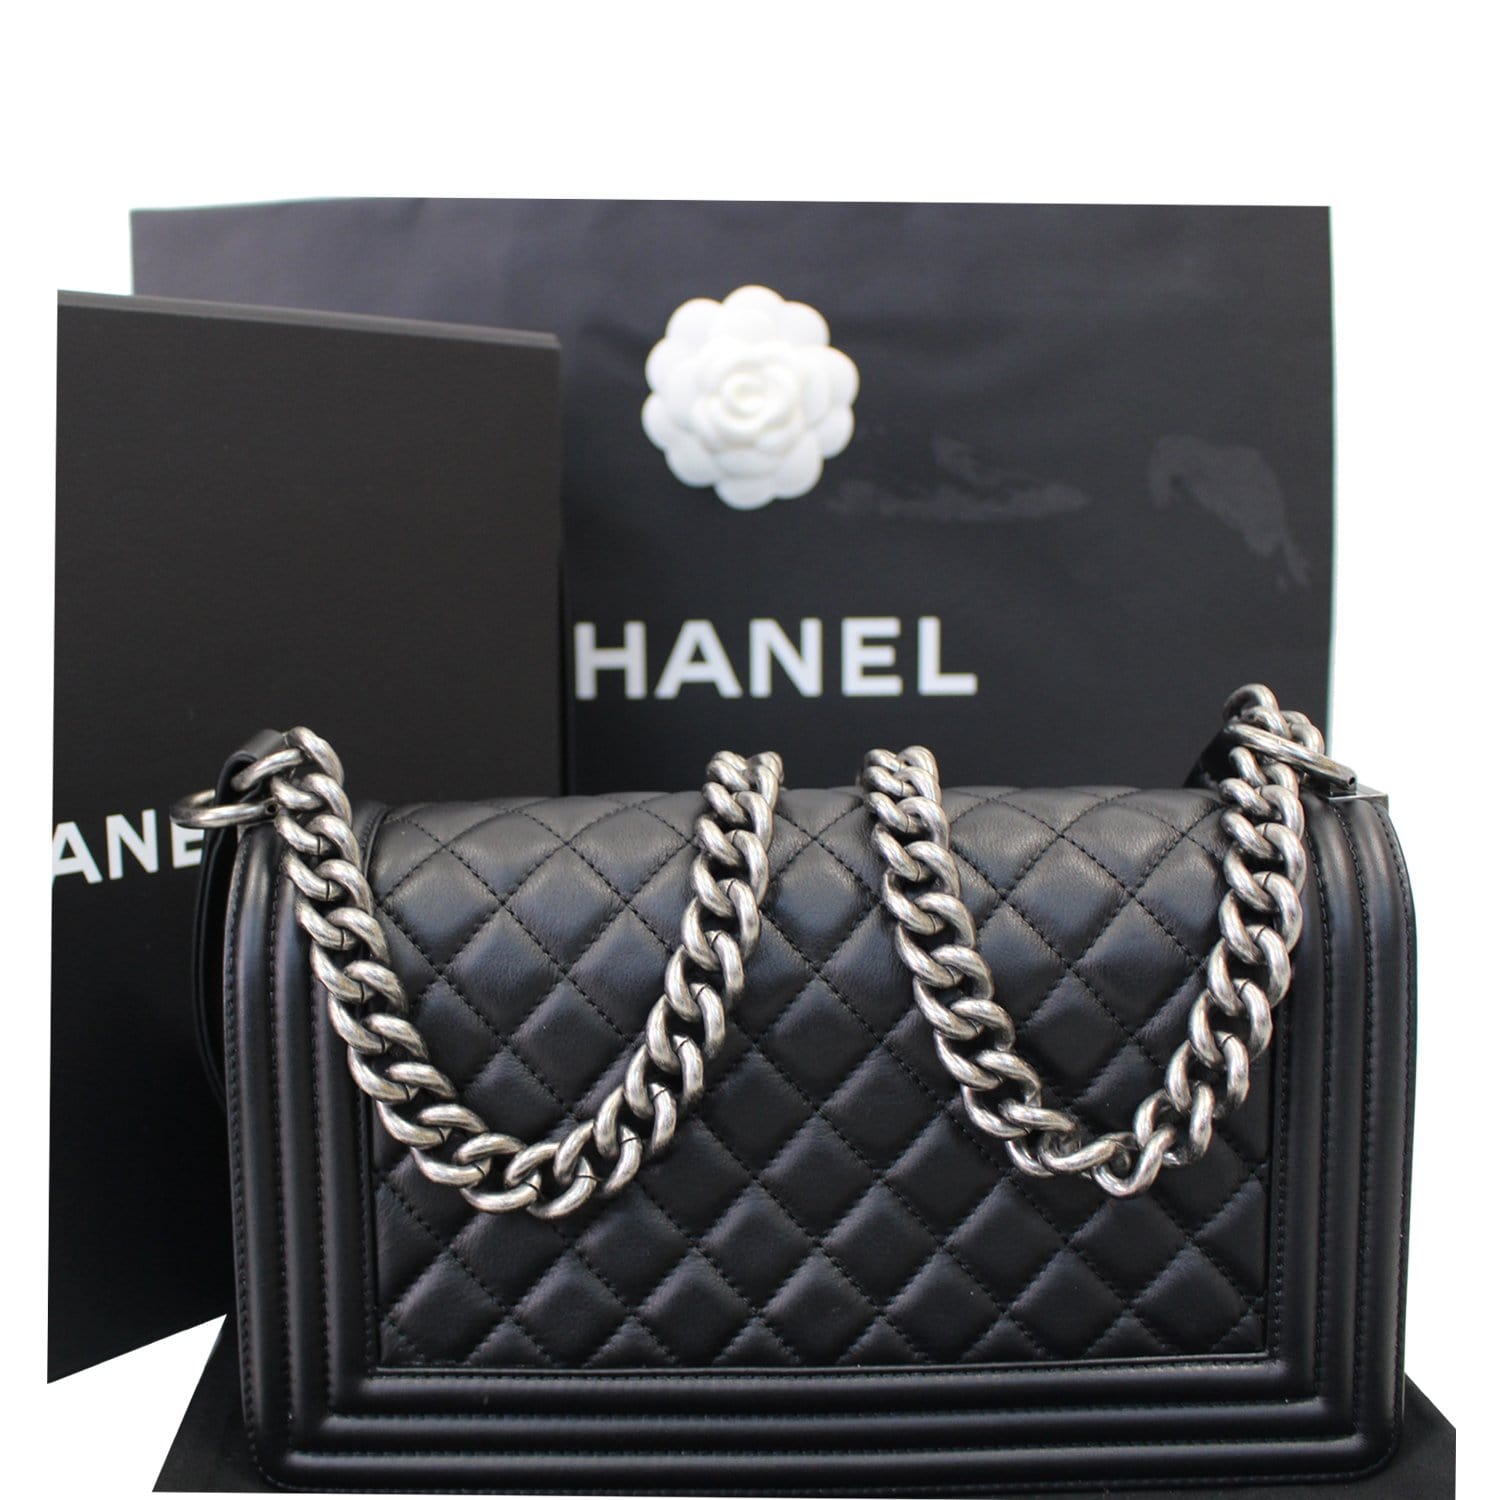 Chanel Boy Medium Leather Shoulder Bag - Chanel Flap